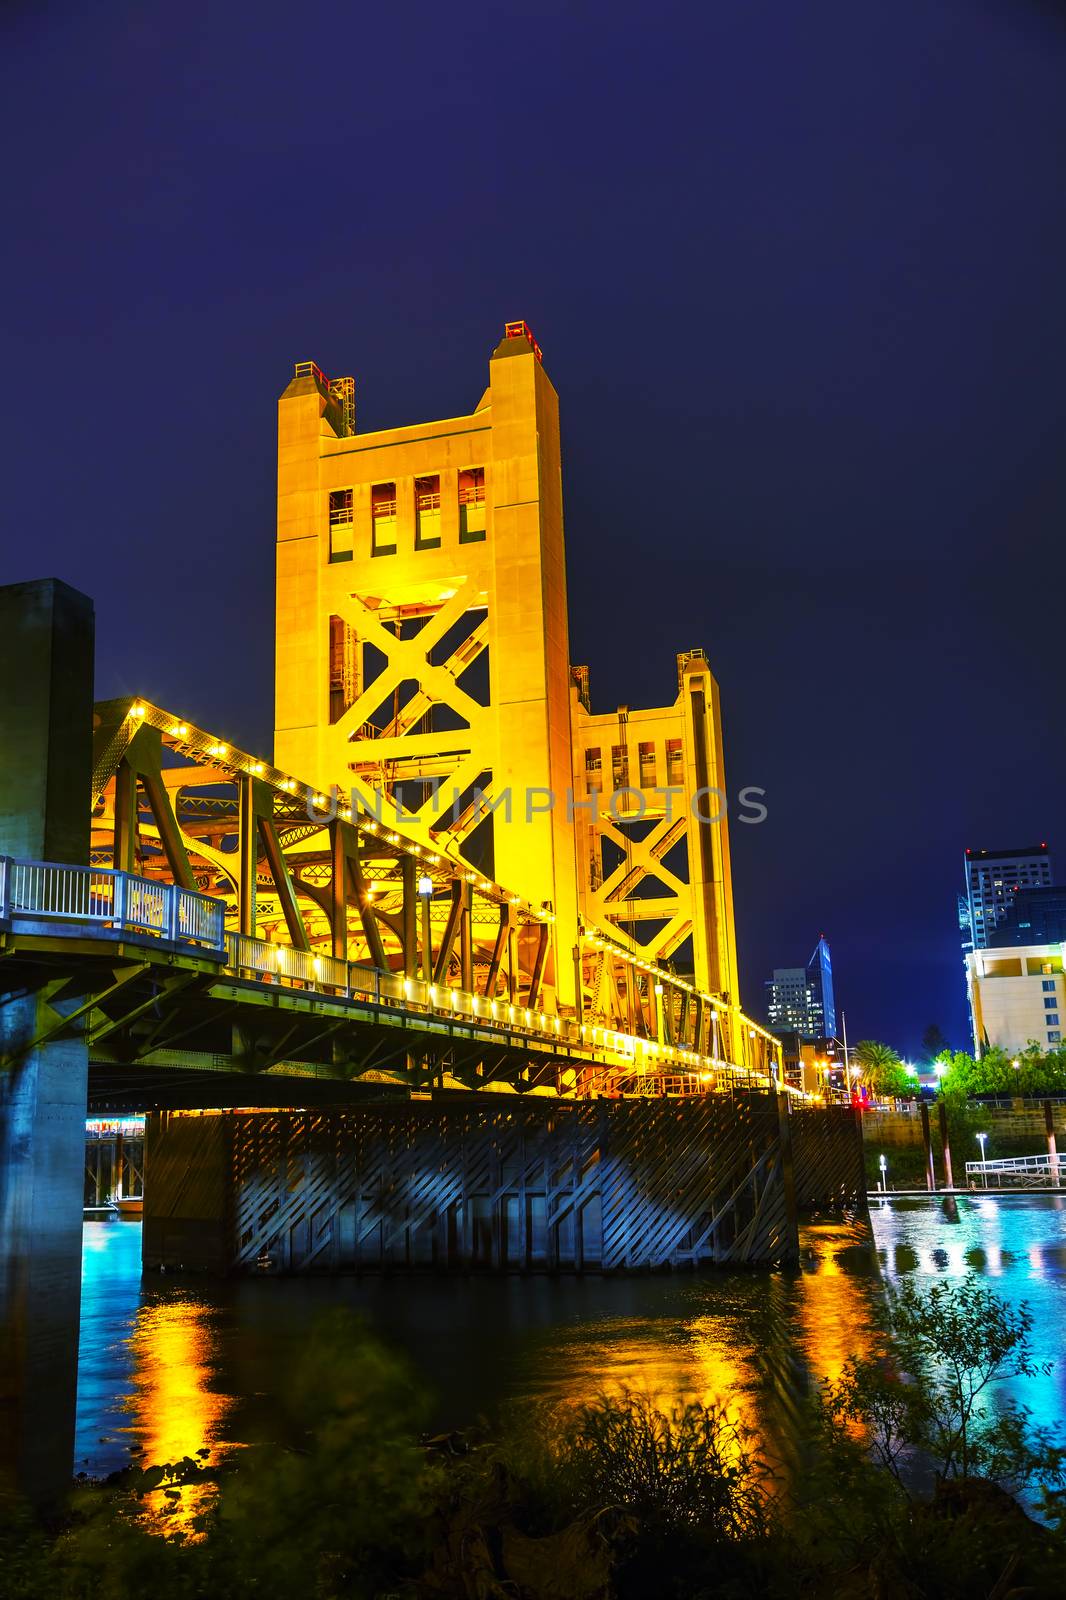 Golden Gates drawbridge in Sacramento at the night time